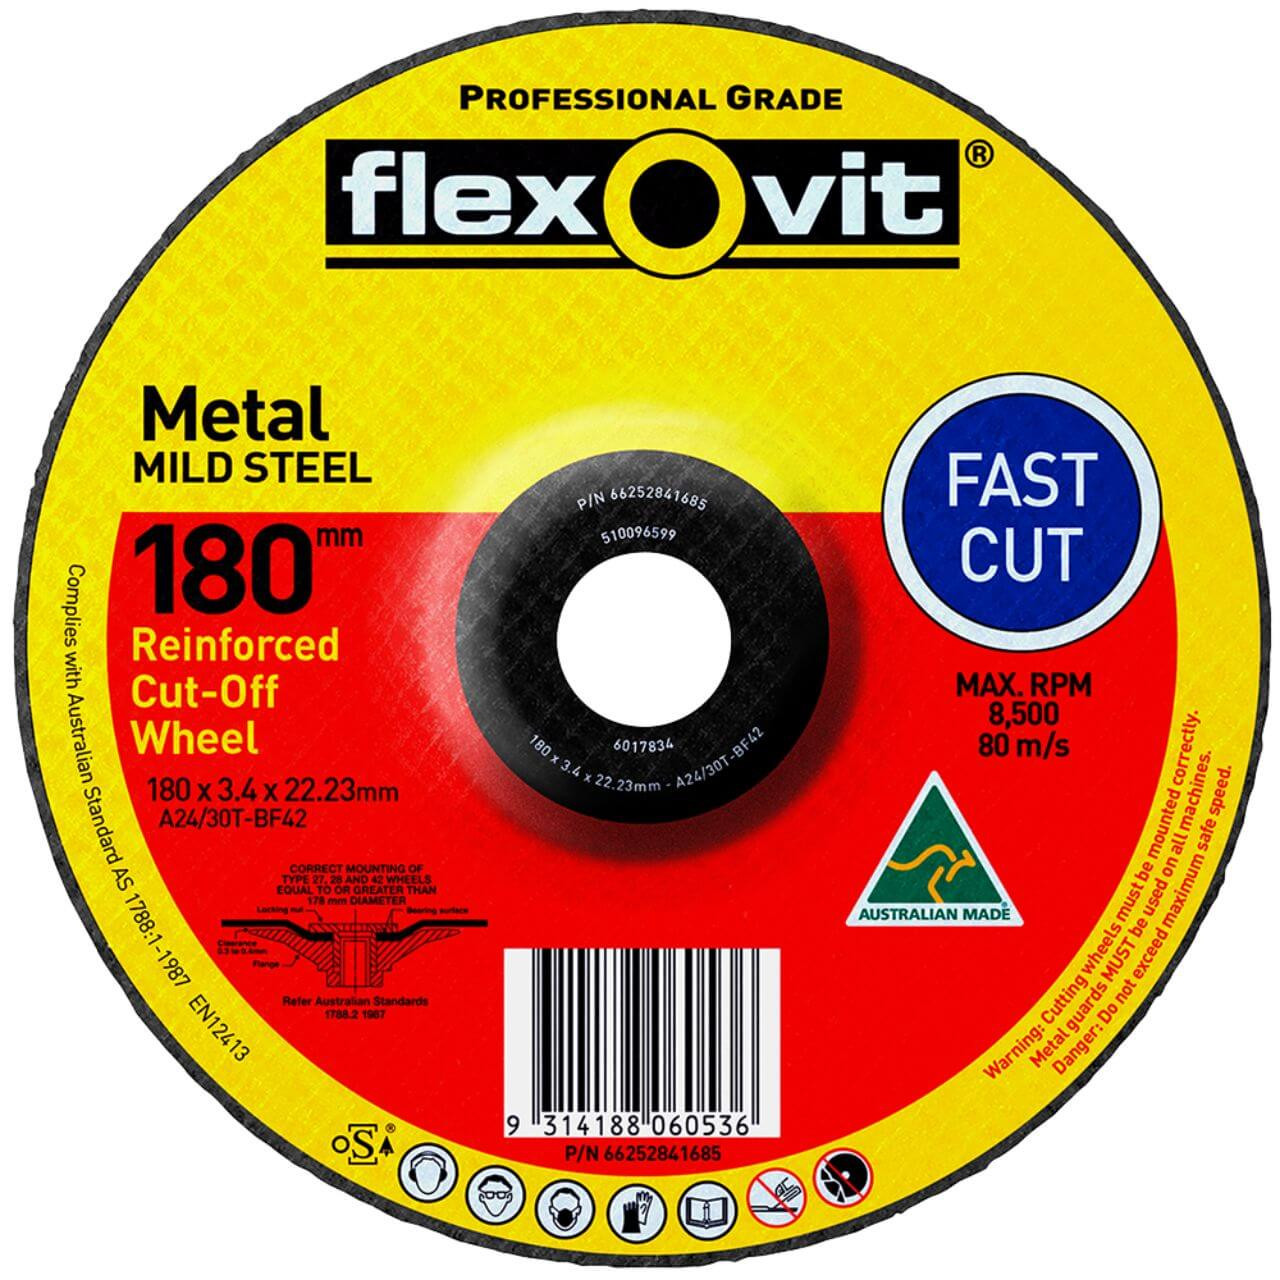 Flexovit A24/30T 180x3.4x22 DC Metal Cutting Disc 50/box